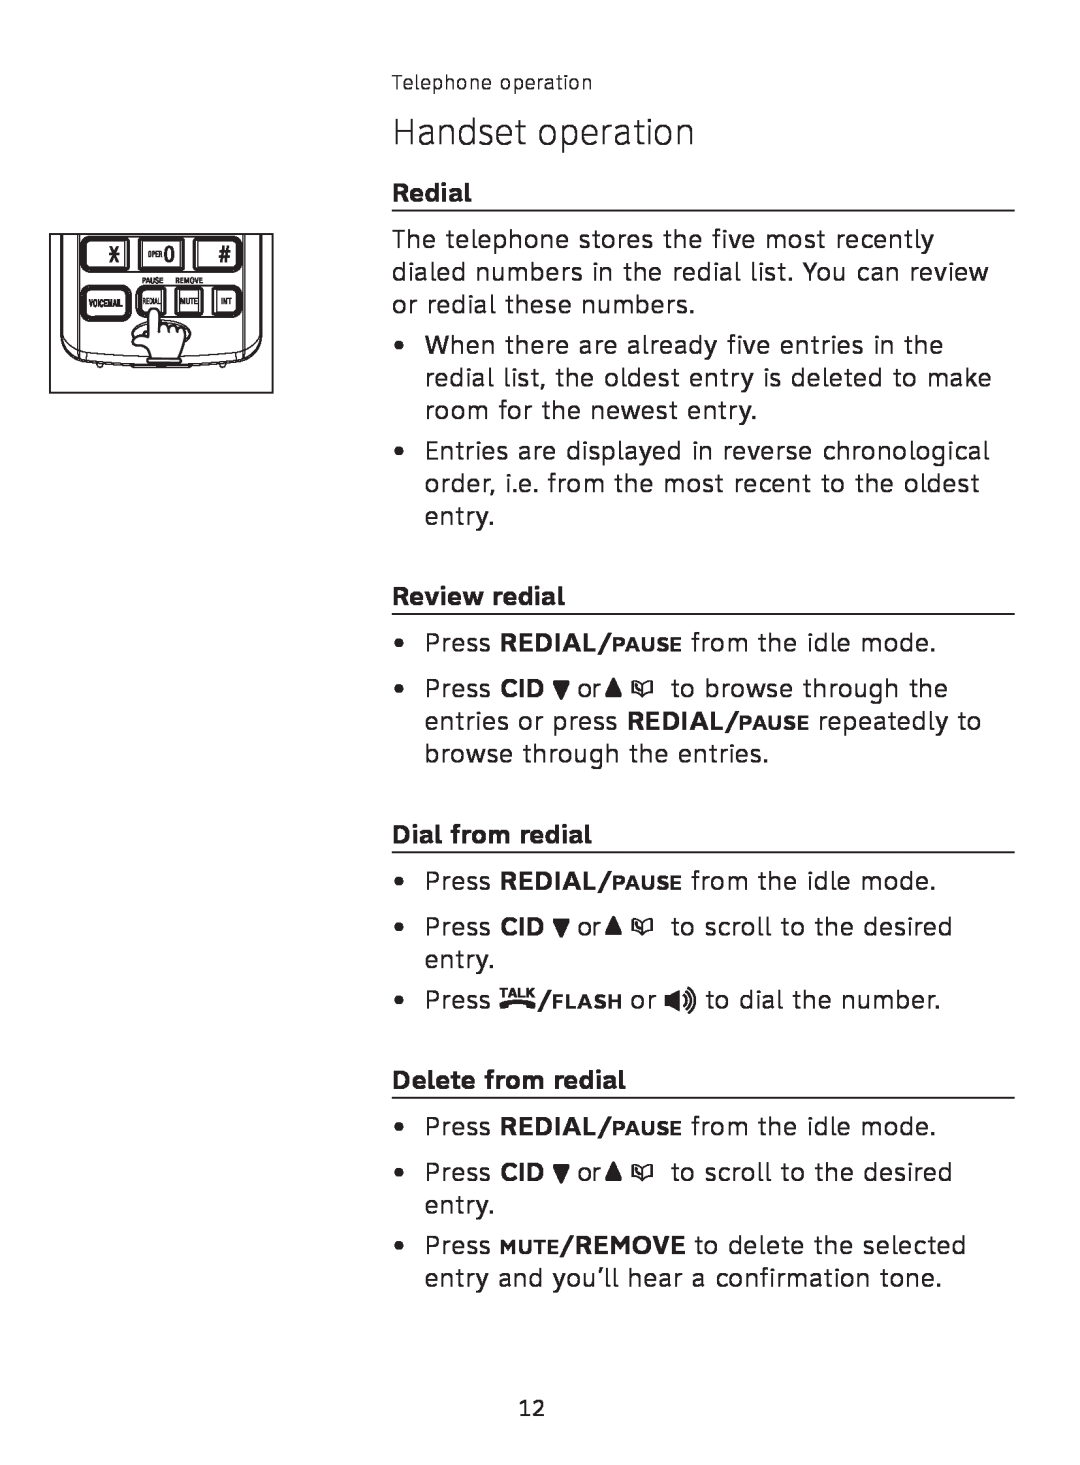 AT&T AT3111-2 user manual Handset operation, Redial, Review redial, Dial from redial, Delete from redial 